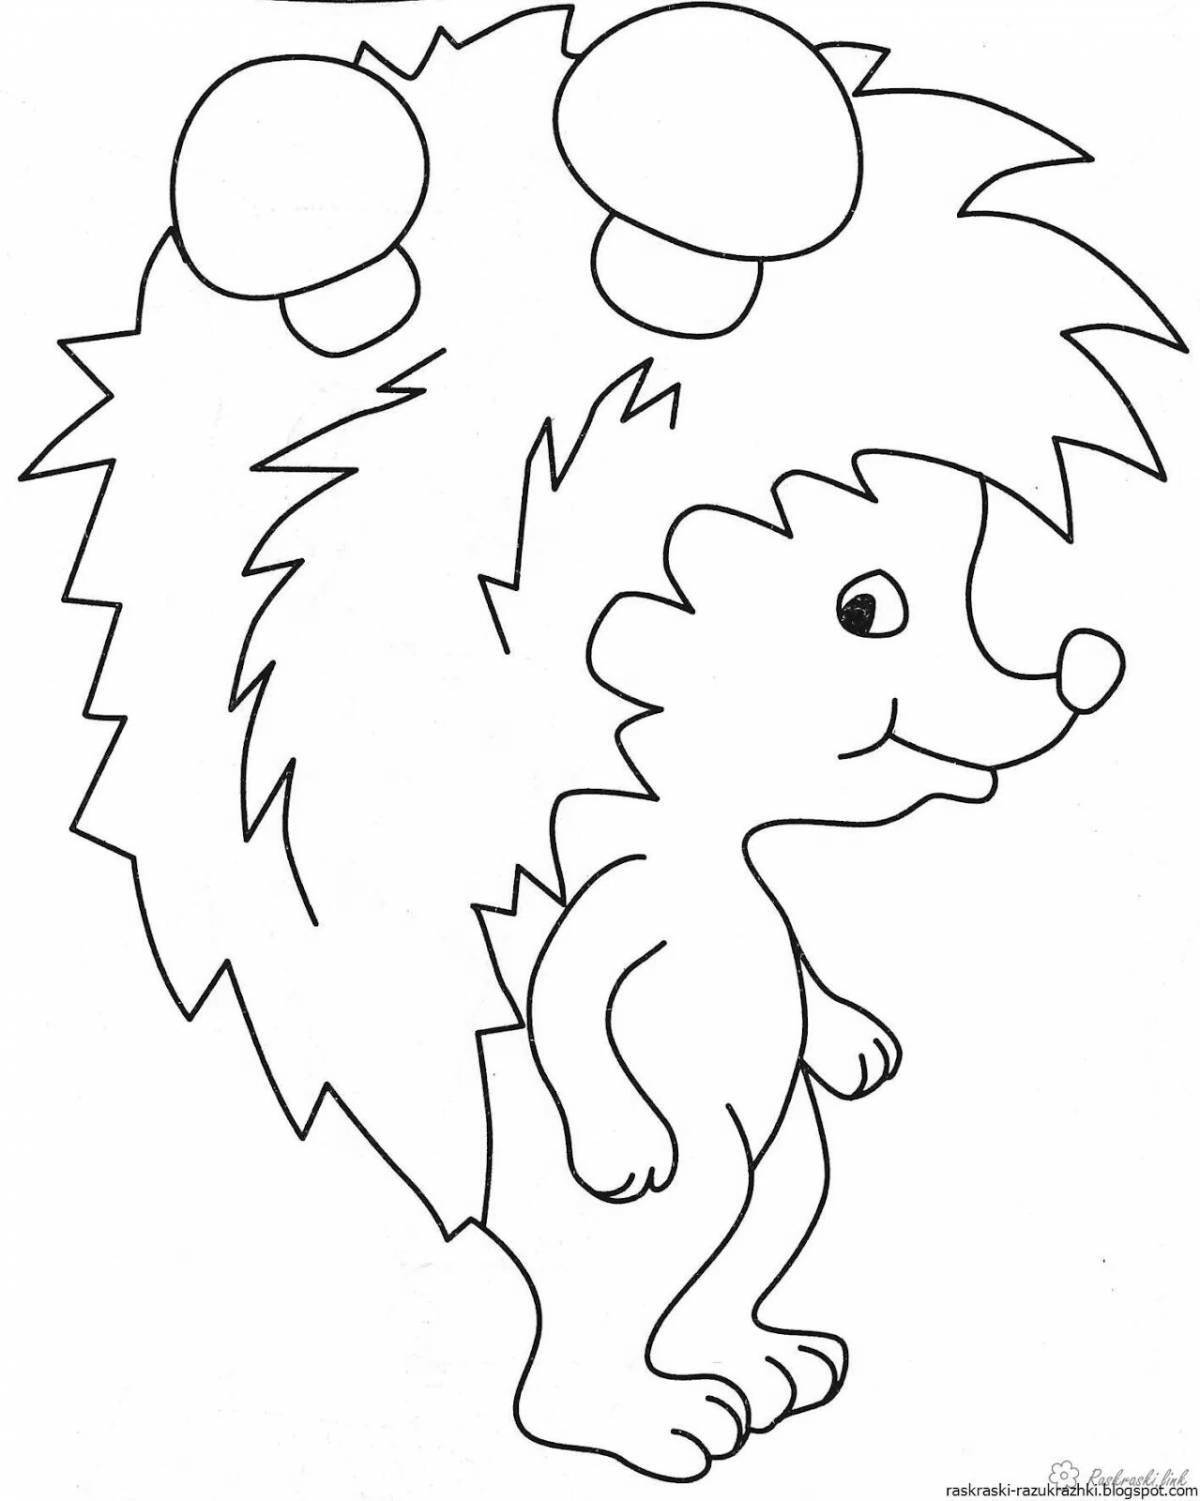 Creative coloring hedgehog for children's crafts